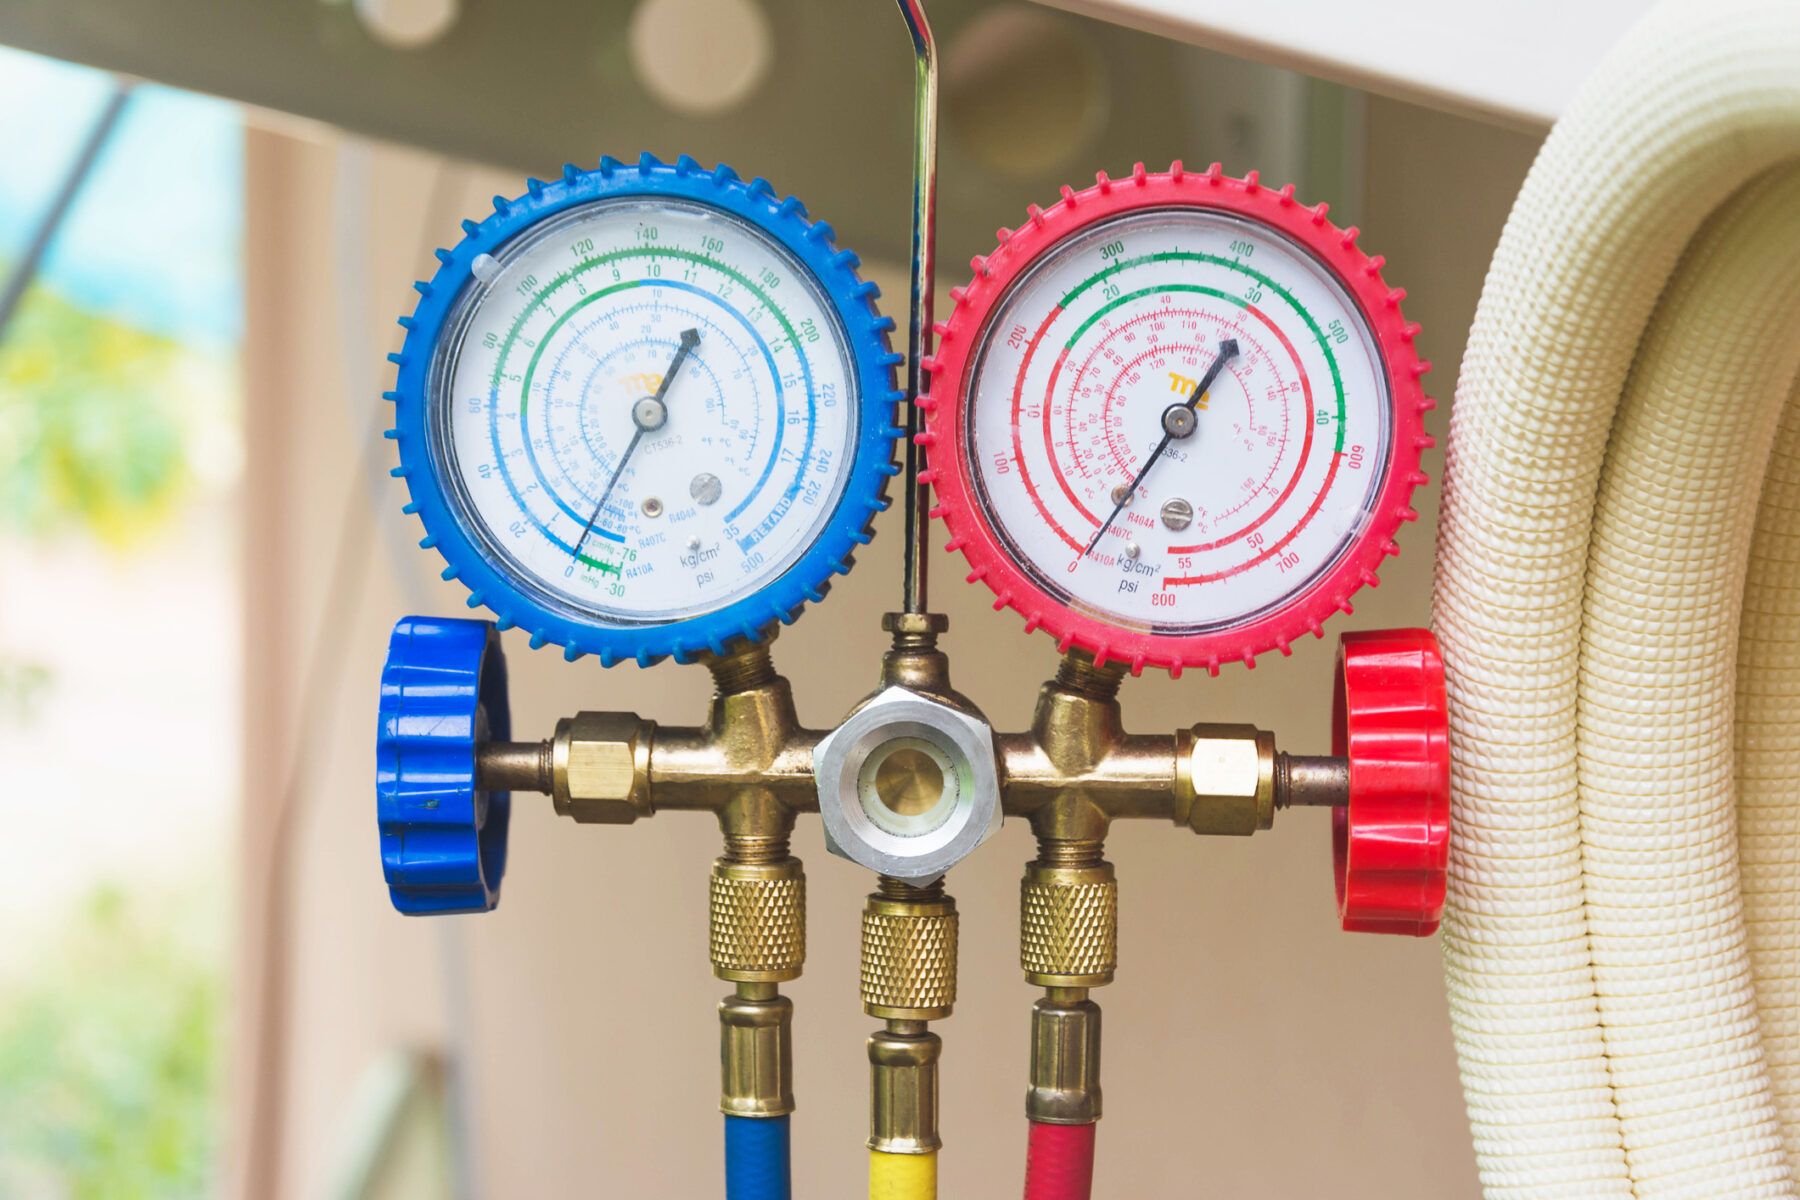 Commercial air conditioner pressure gauge